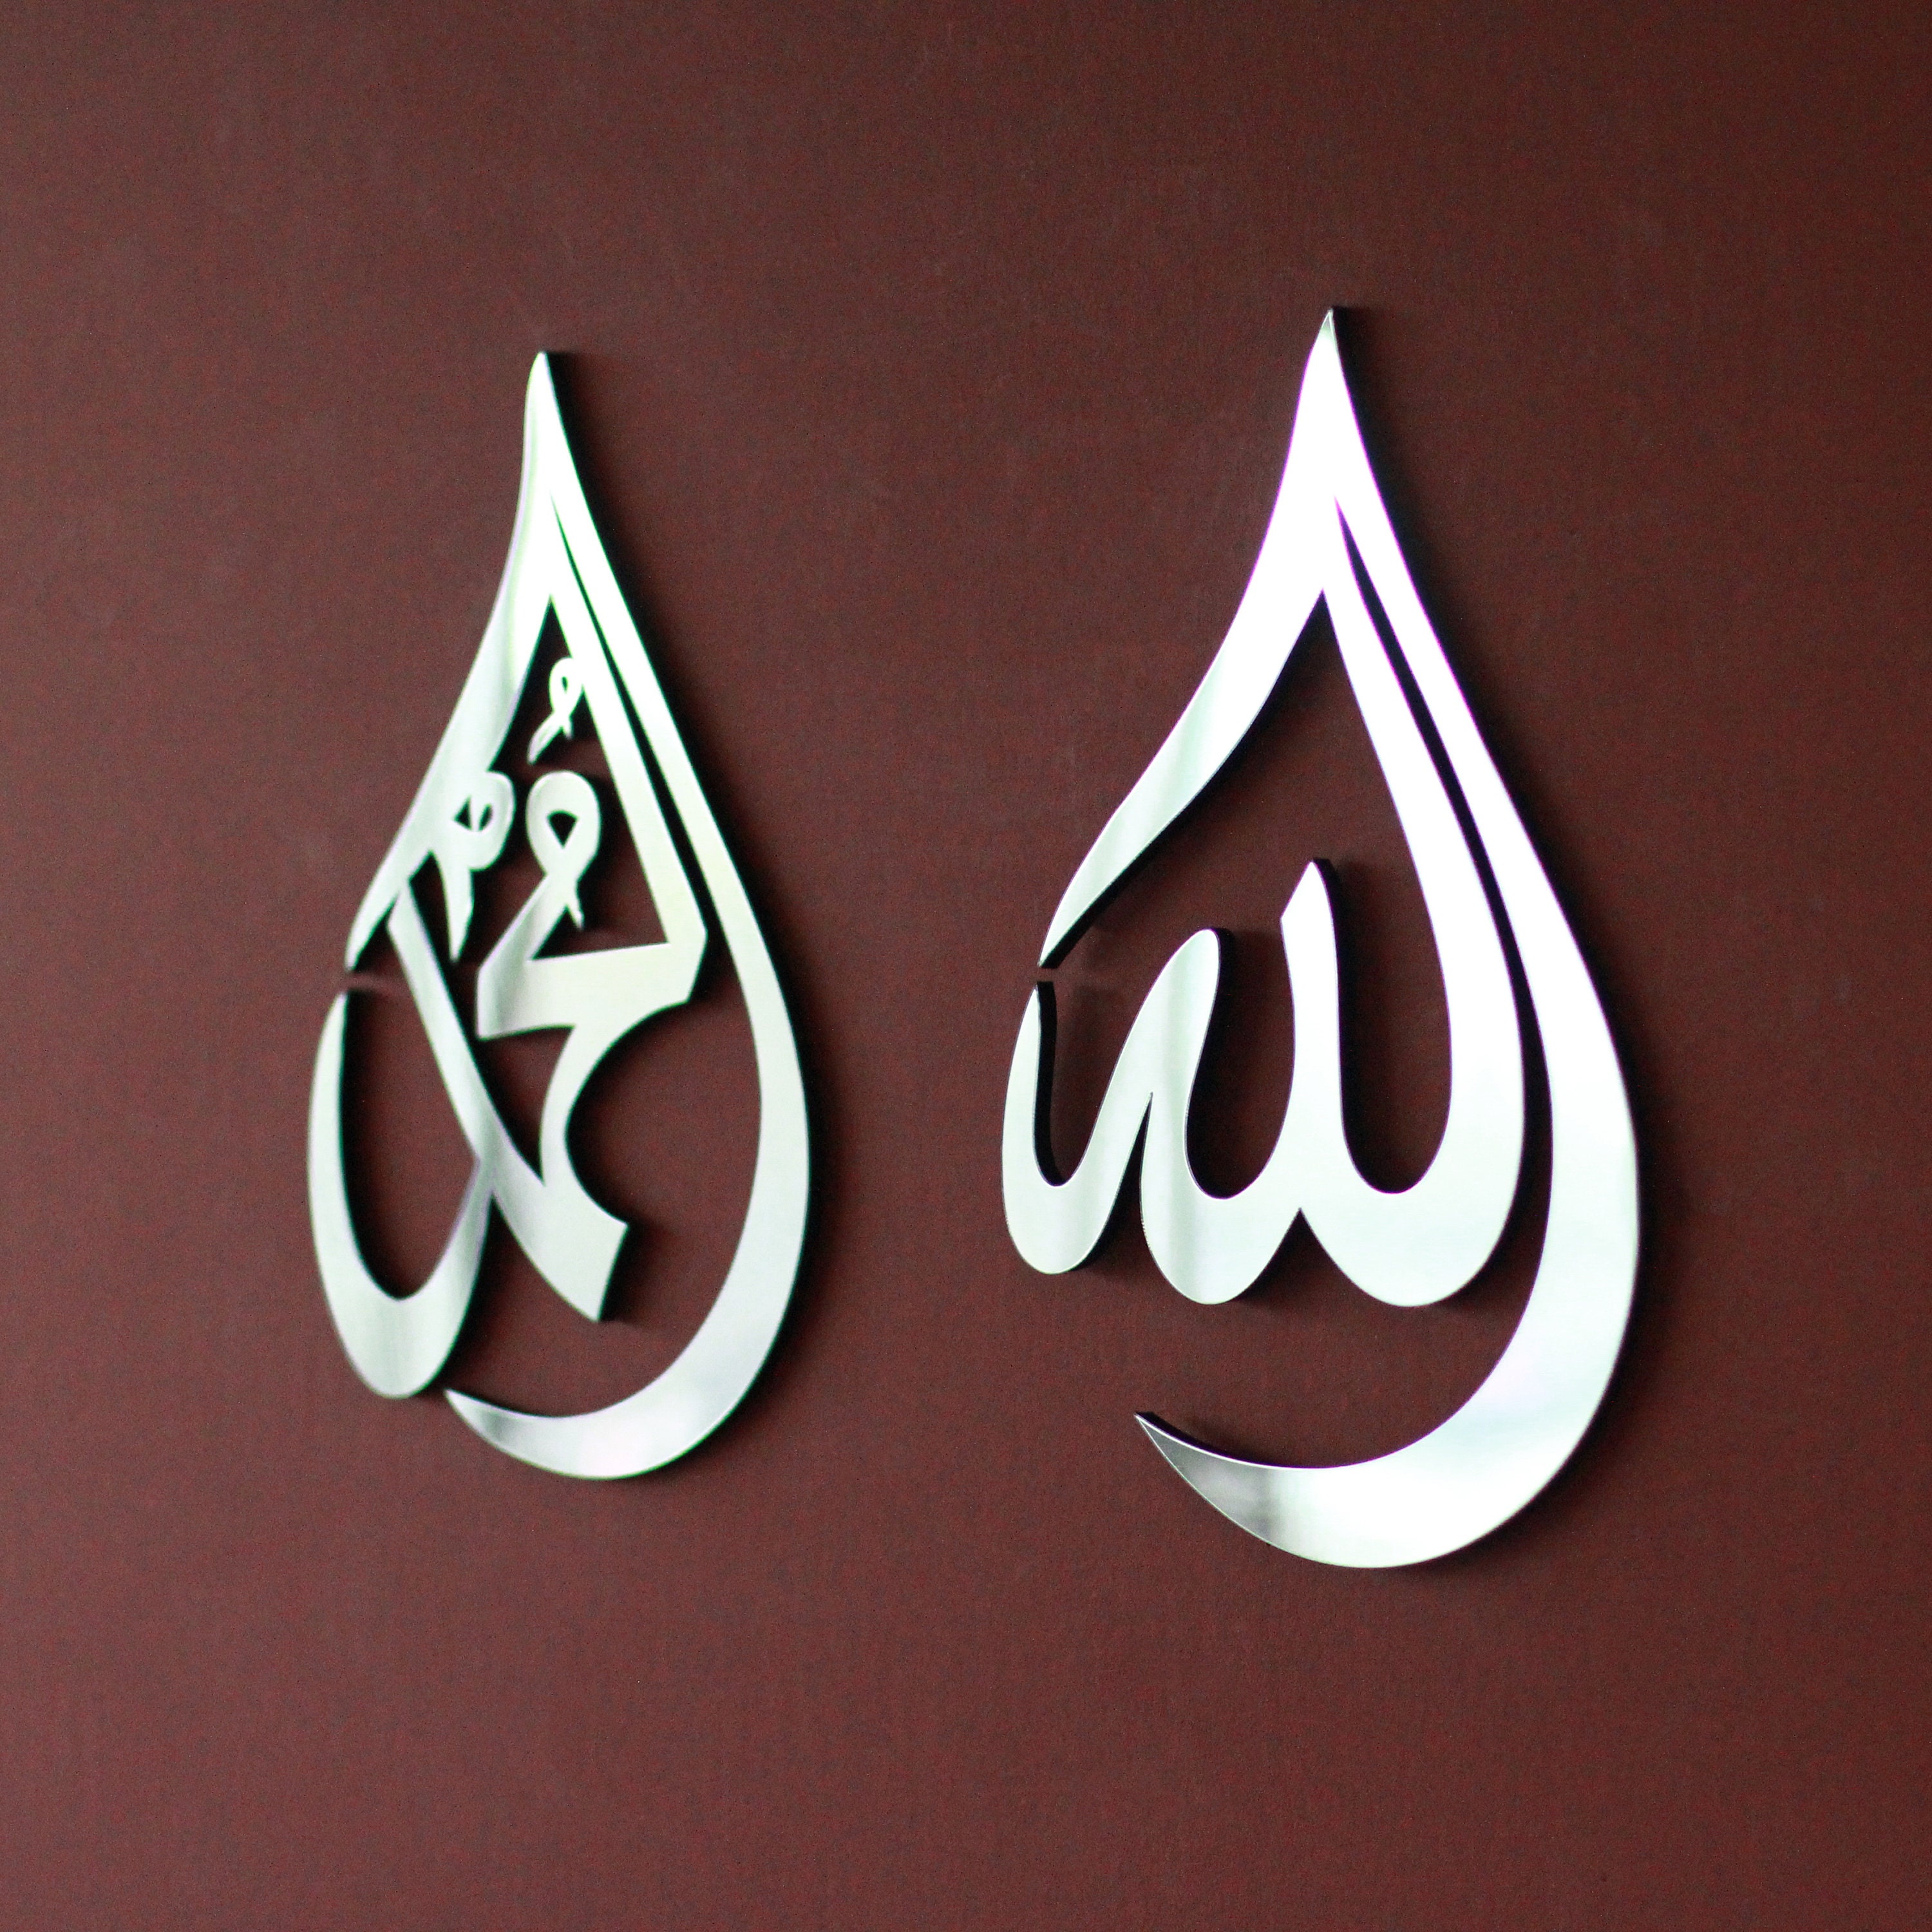 Supreme Power Calligraphy Allah Logo Graphic by designmonsoon · Creative  Fabrica